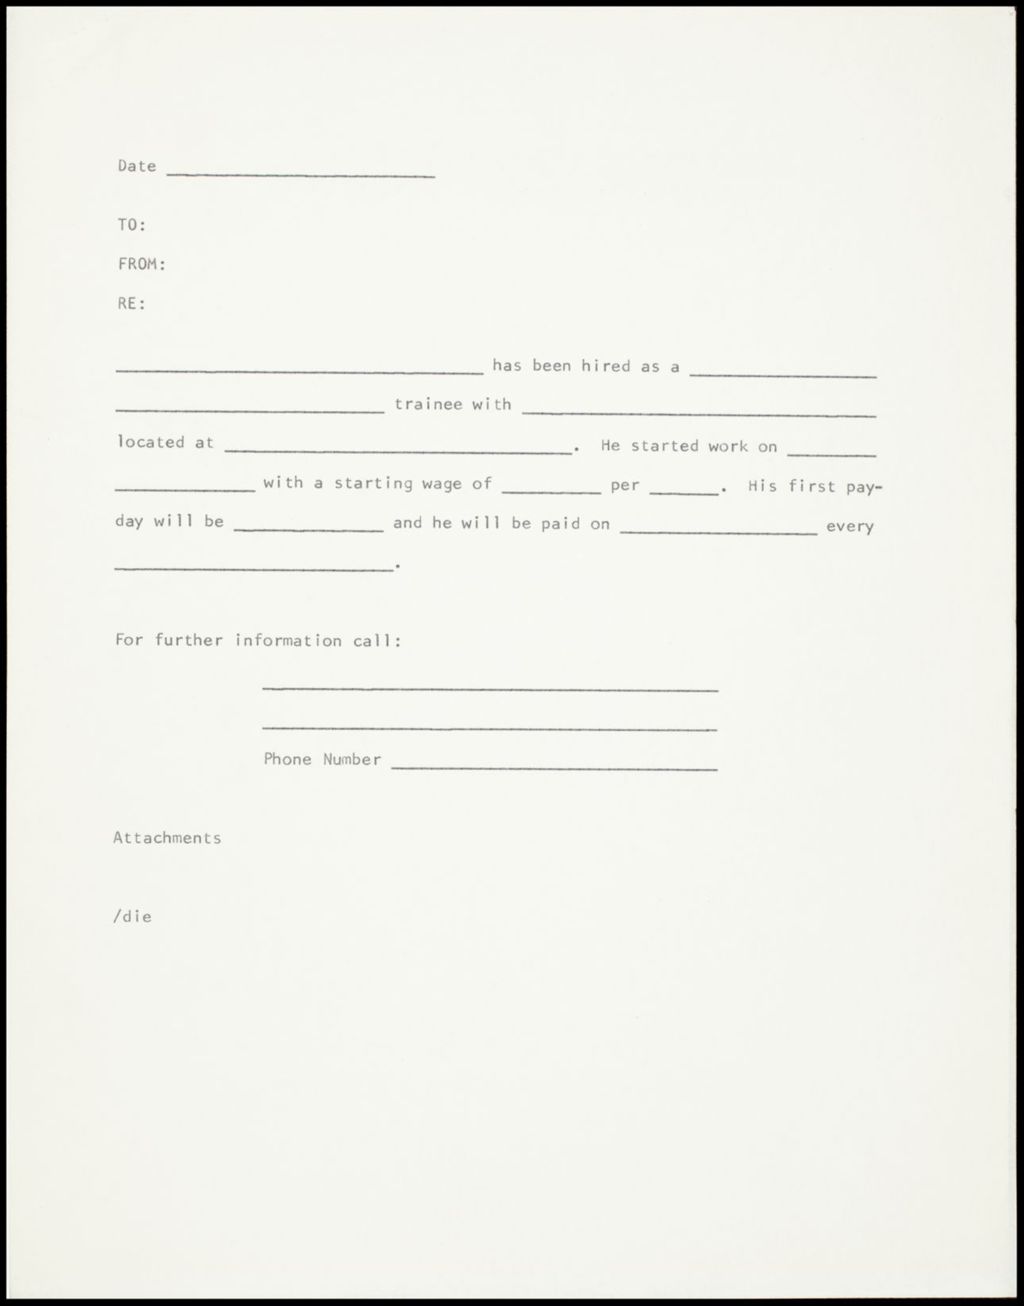 Miniature of Forms - Verification of Employment, undated (Folder II-10)